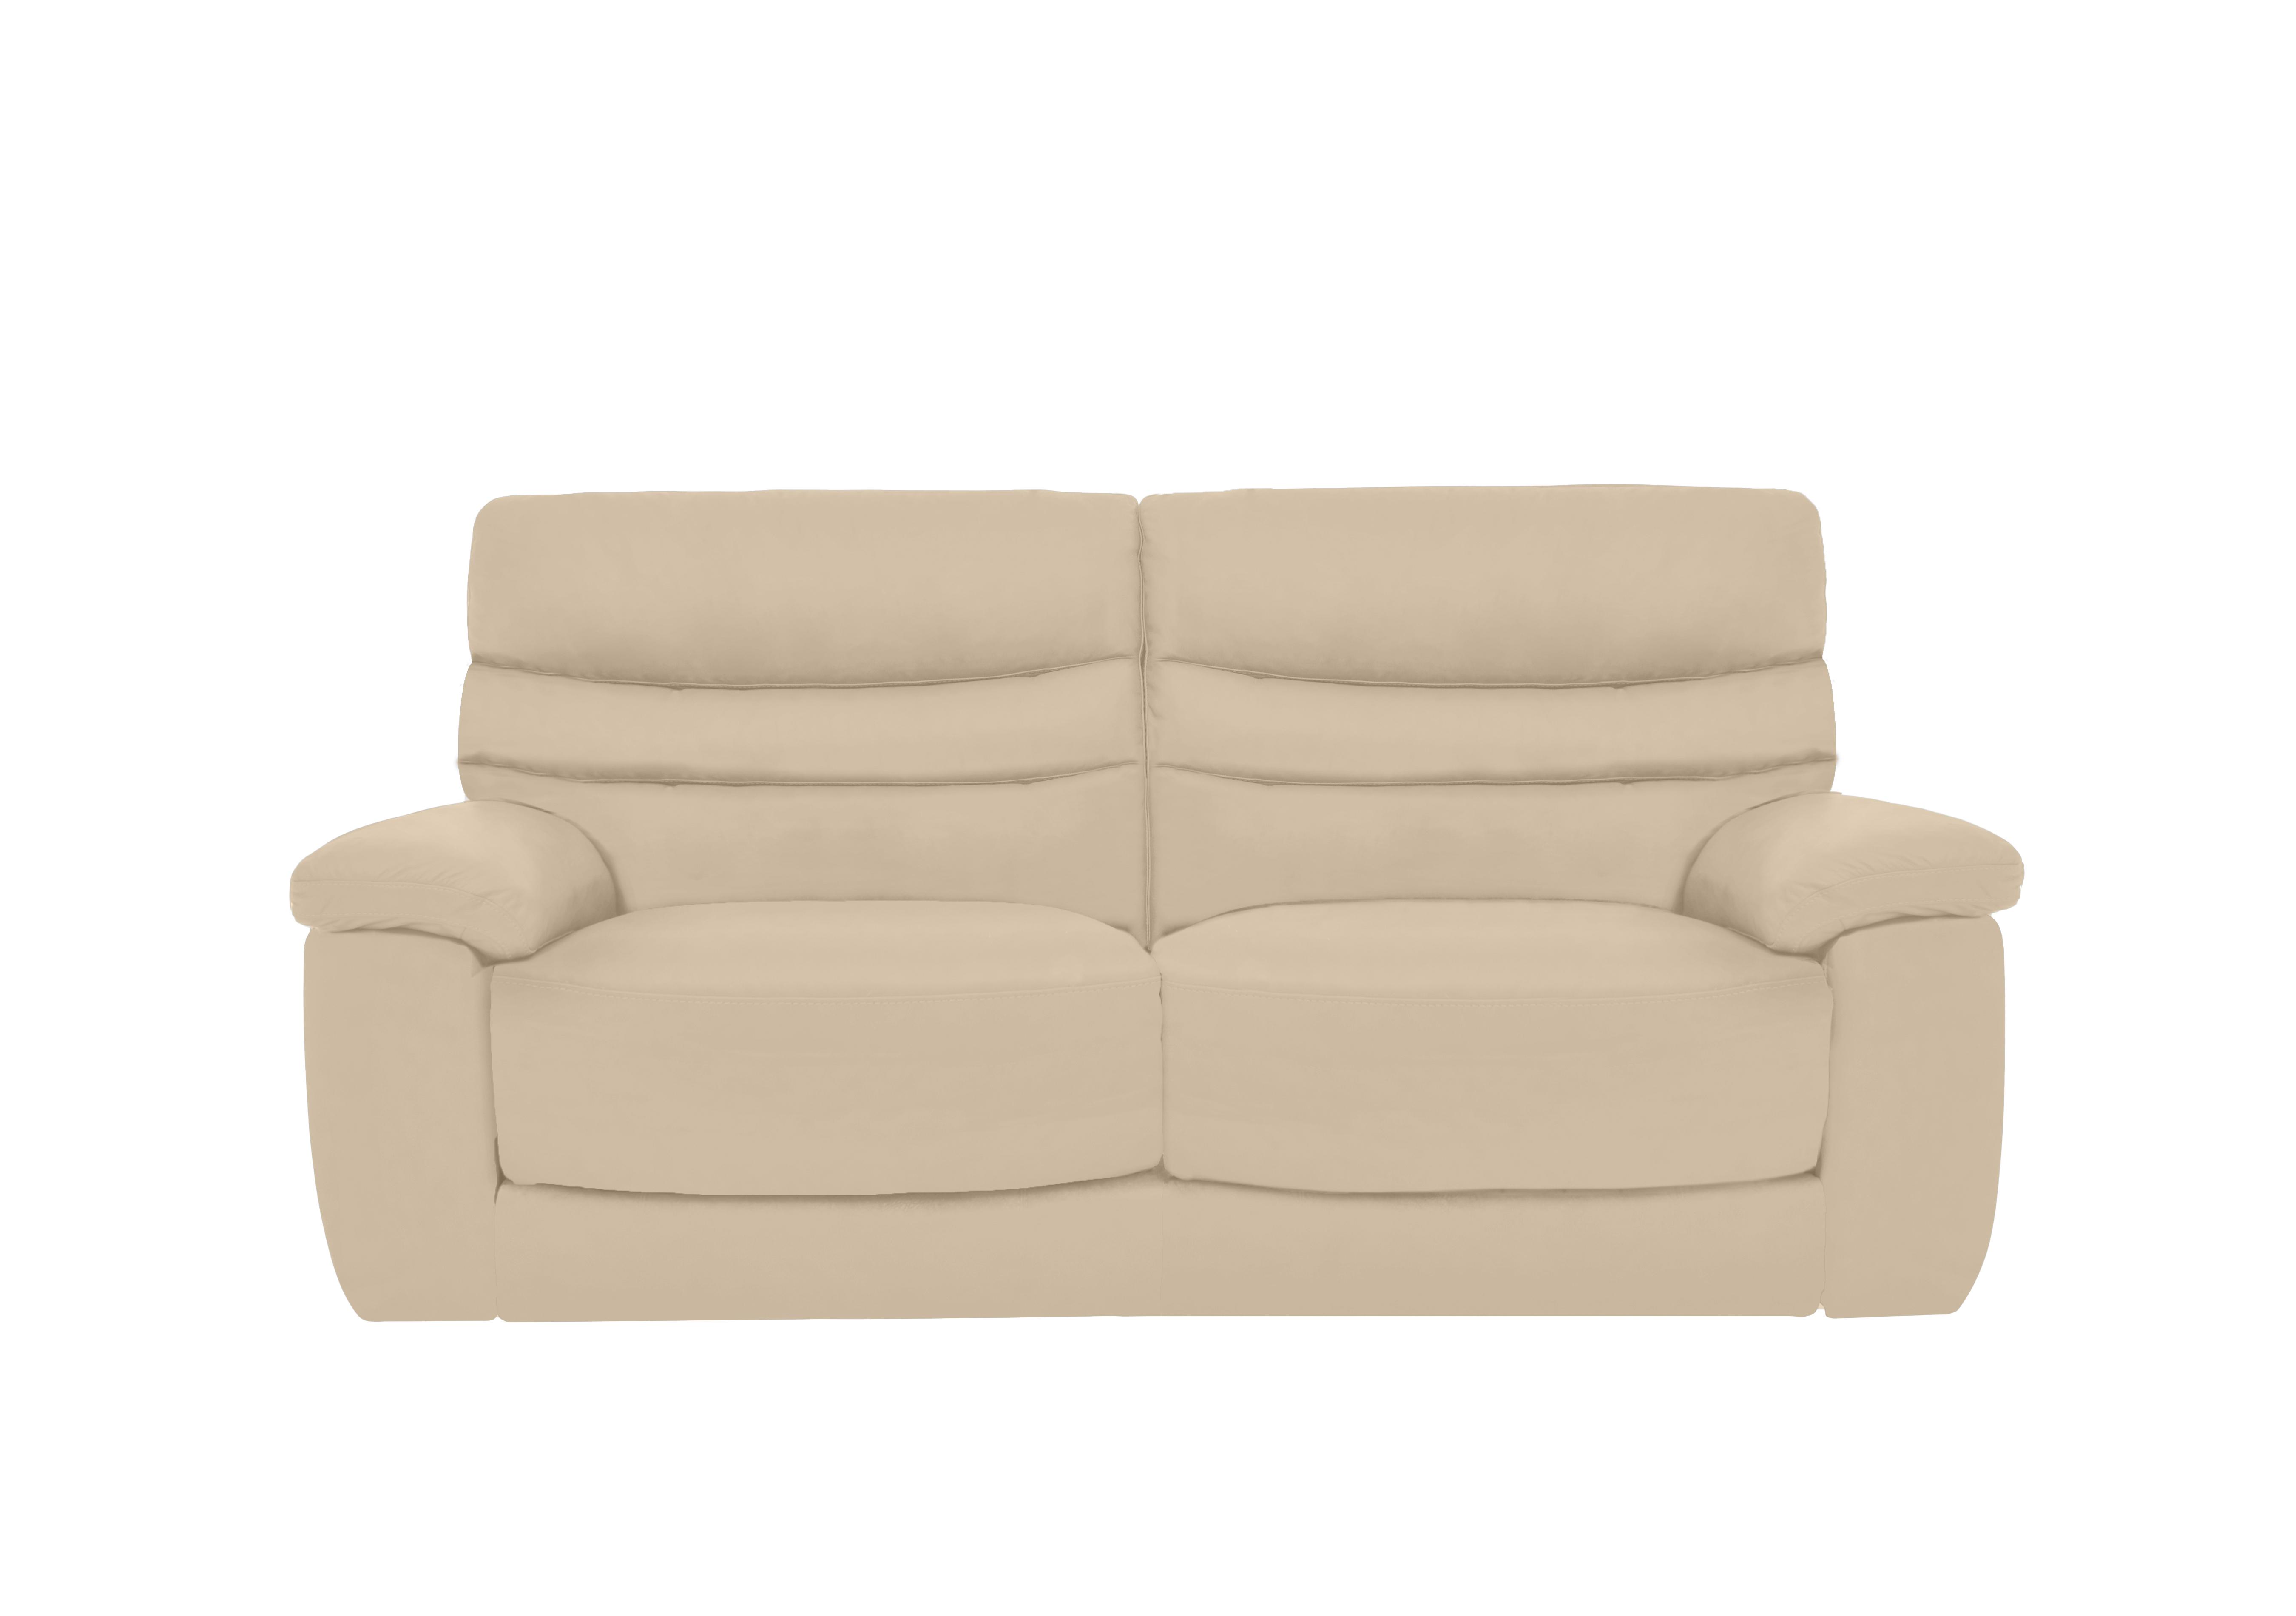 Nimbus 3 Seater Leather Sofa in Bx-862c Bisque on Furniture Village